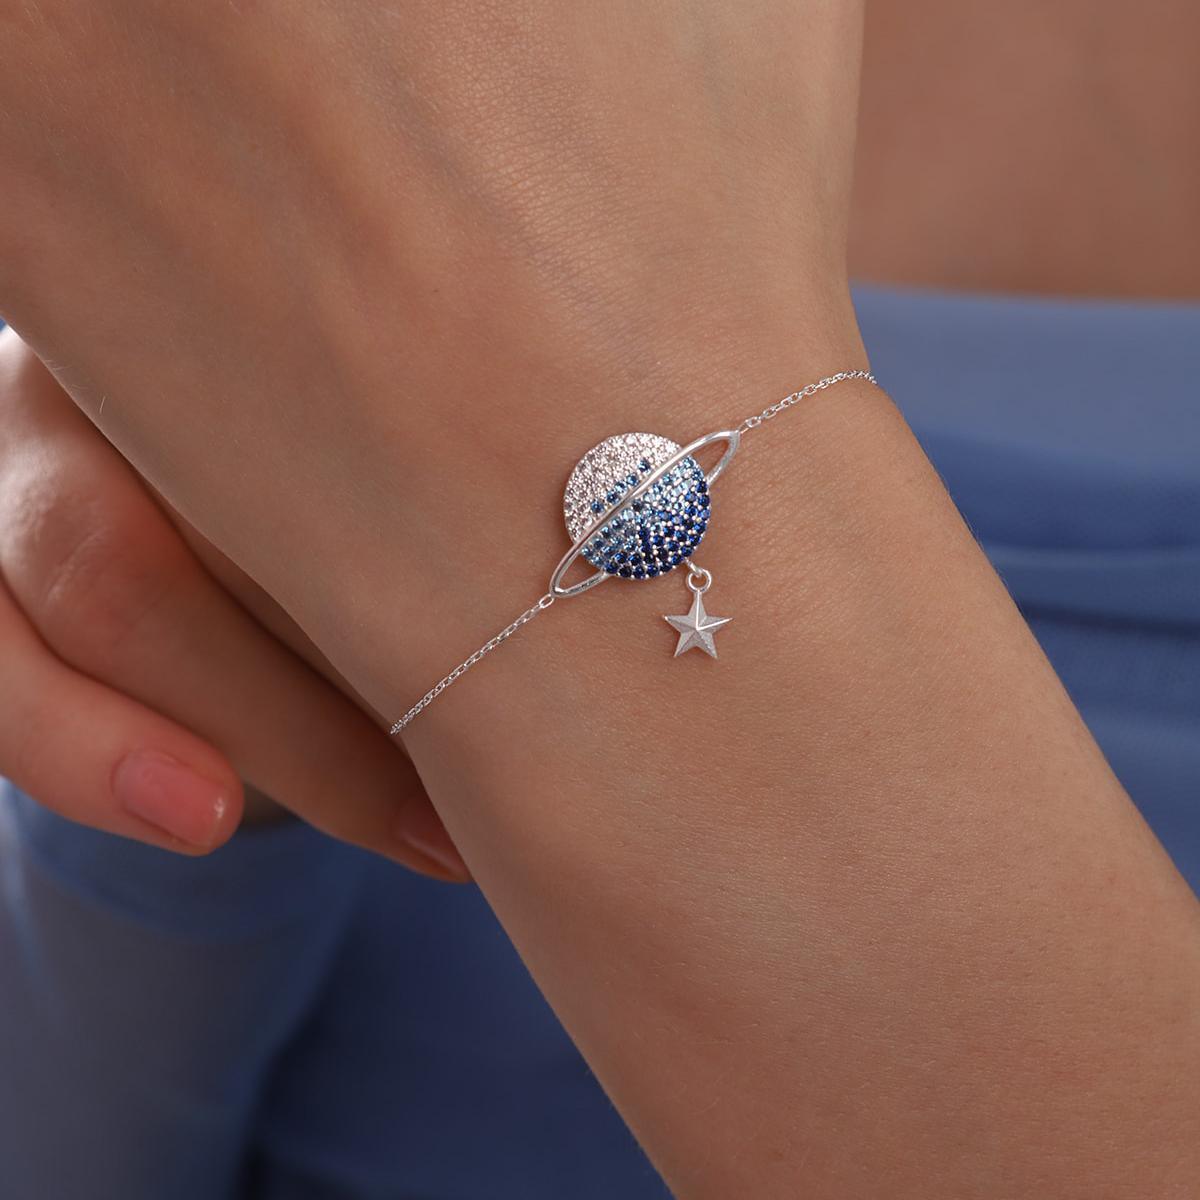 Blue Planet Silver Bracelet • Saturn Silver Bracelet • Gift for Mom - Trending Silver Gifts